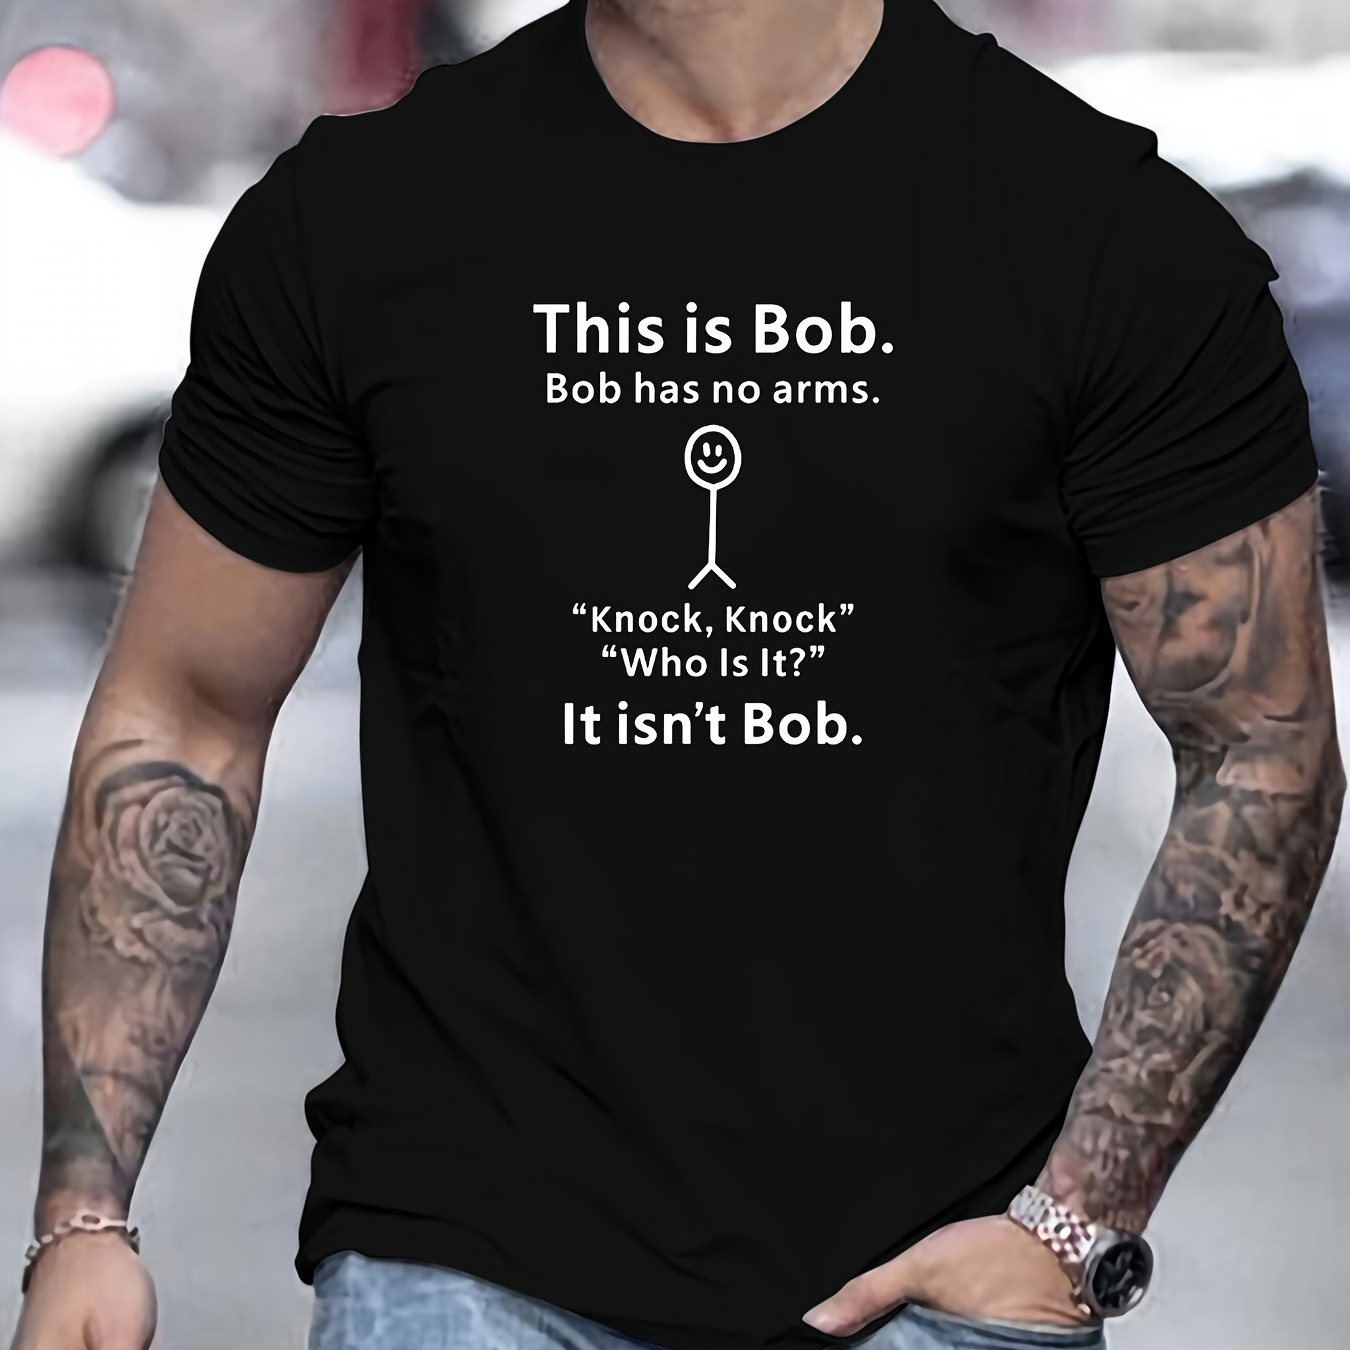 

Bob Has No Arms... Print T Shirt, Tees For Men, Casual Short Sleeve T-shirt For Summer